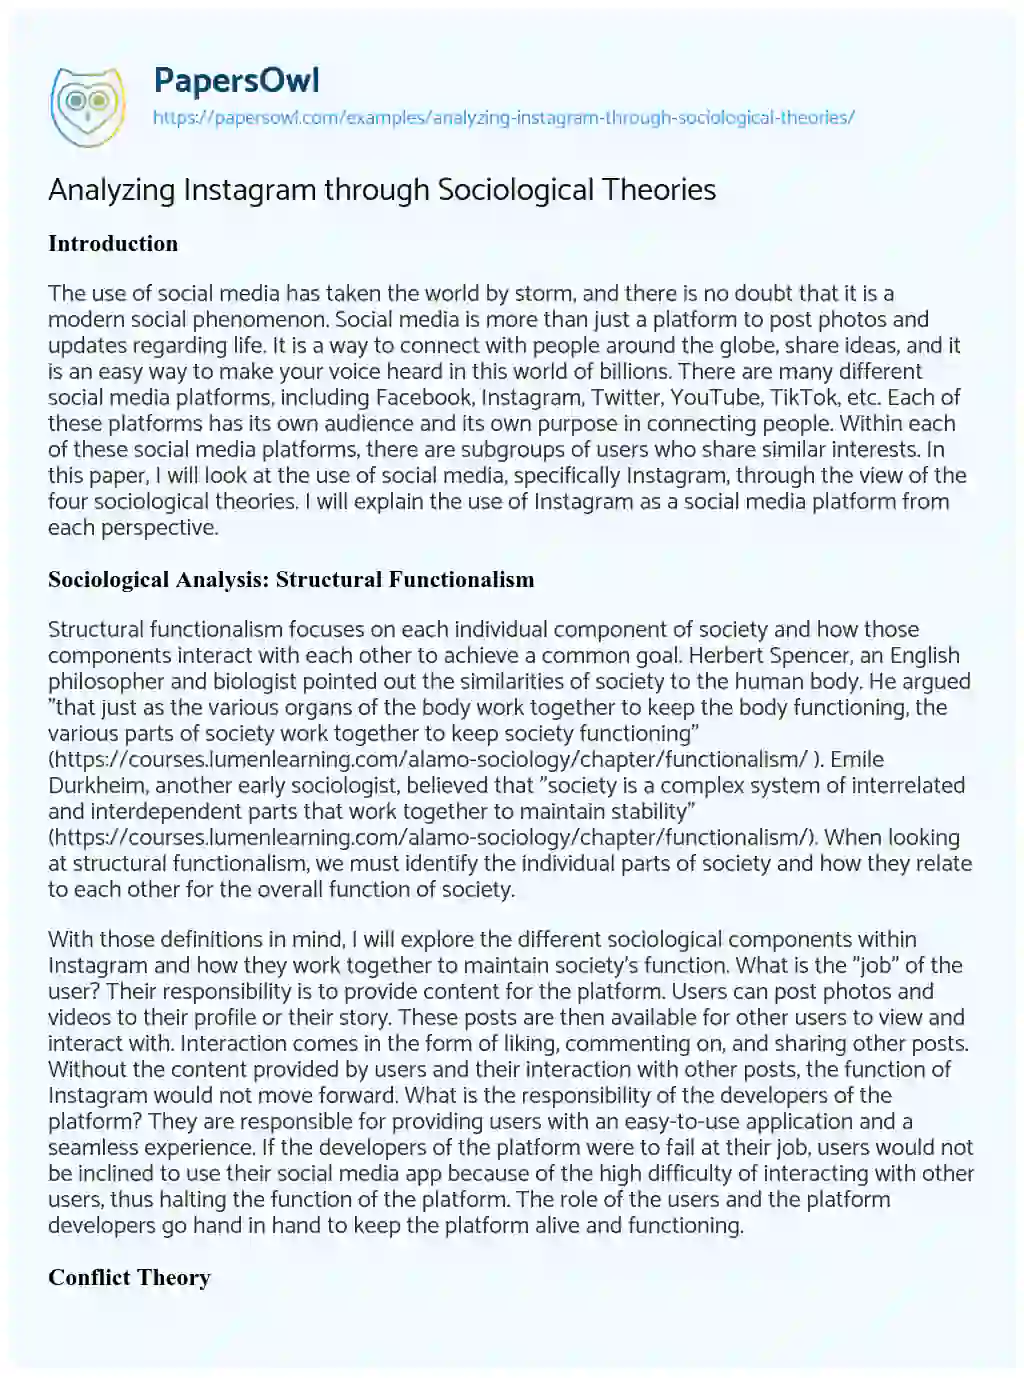 Analyzing Instagram through Sociological Theories essay